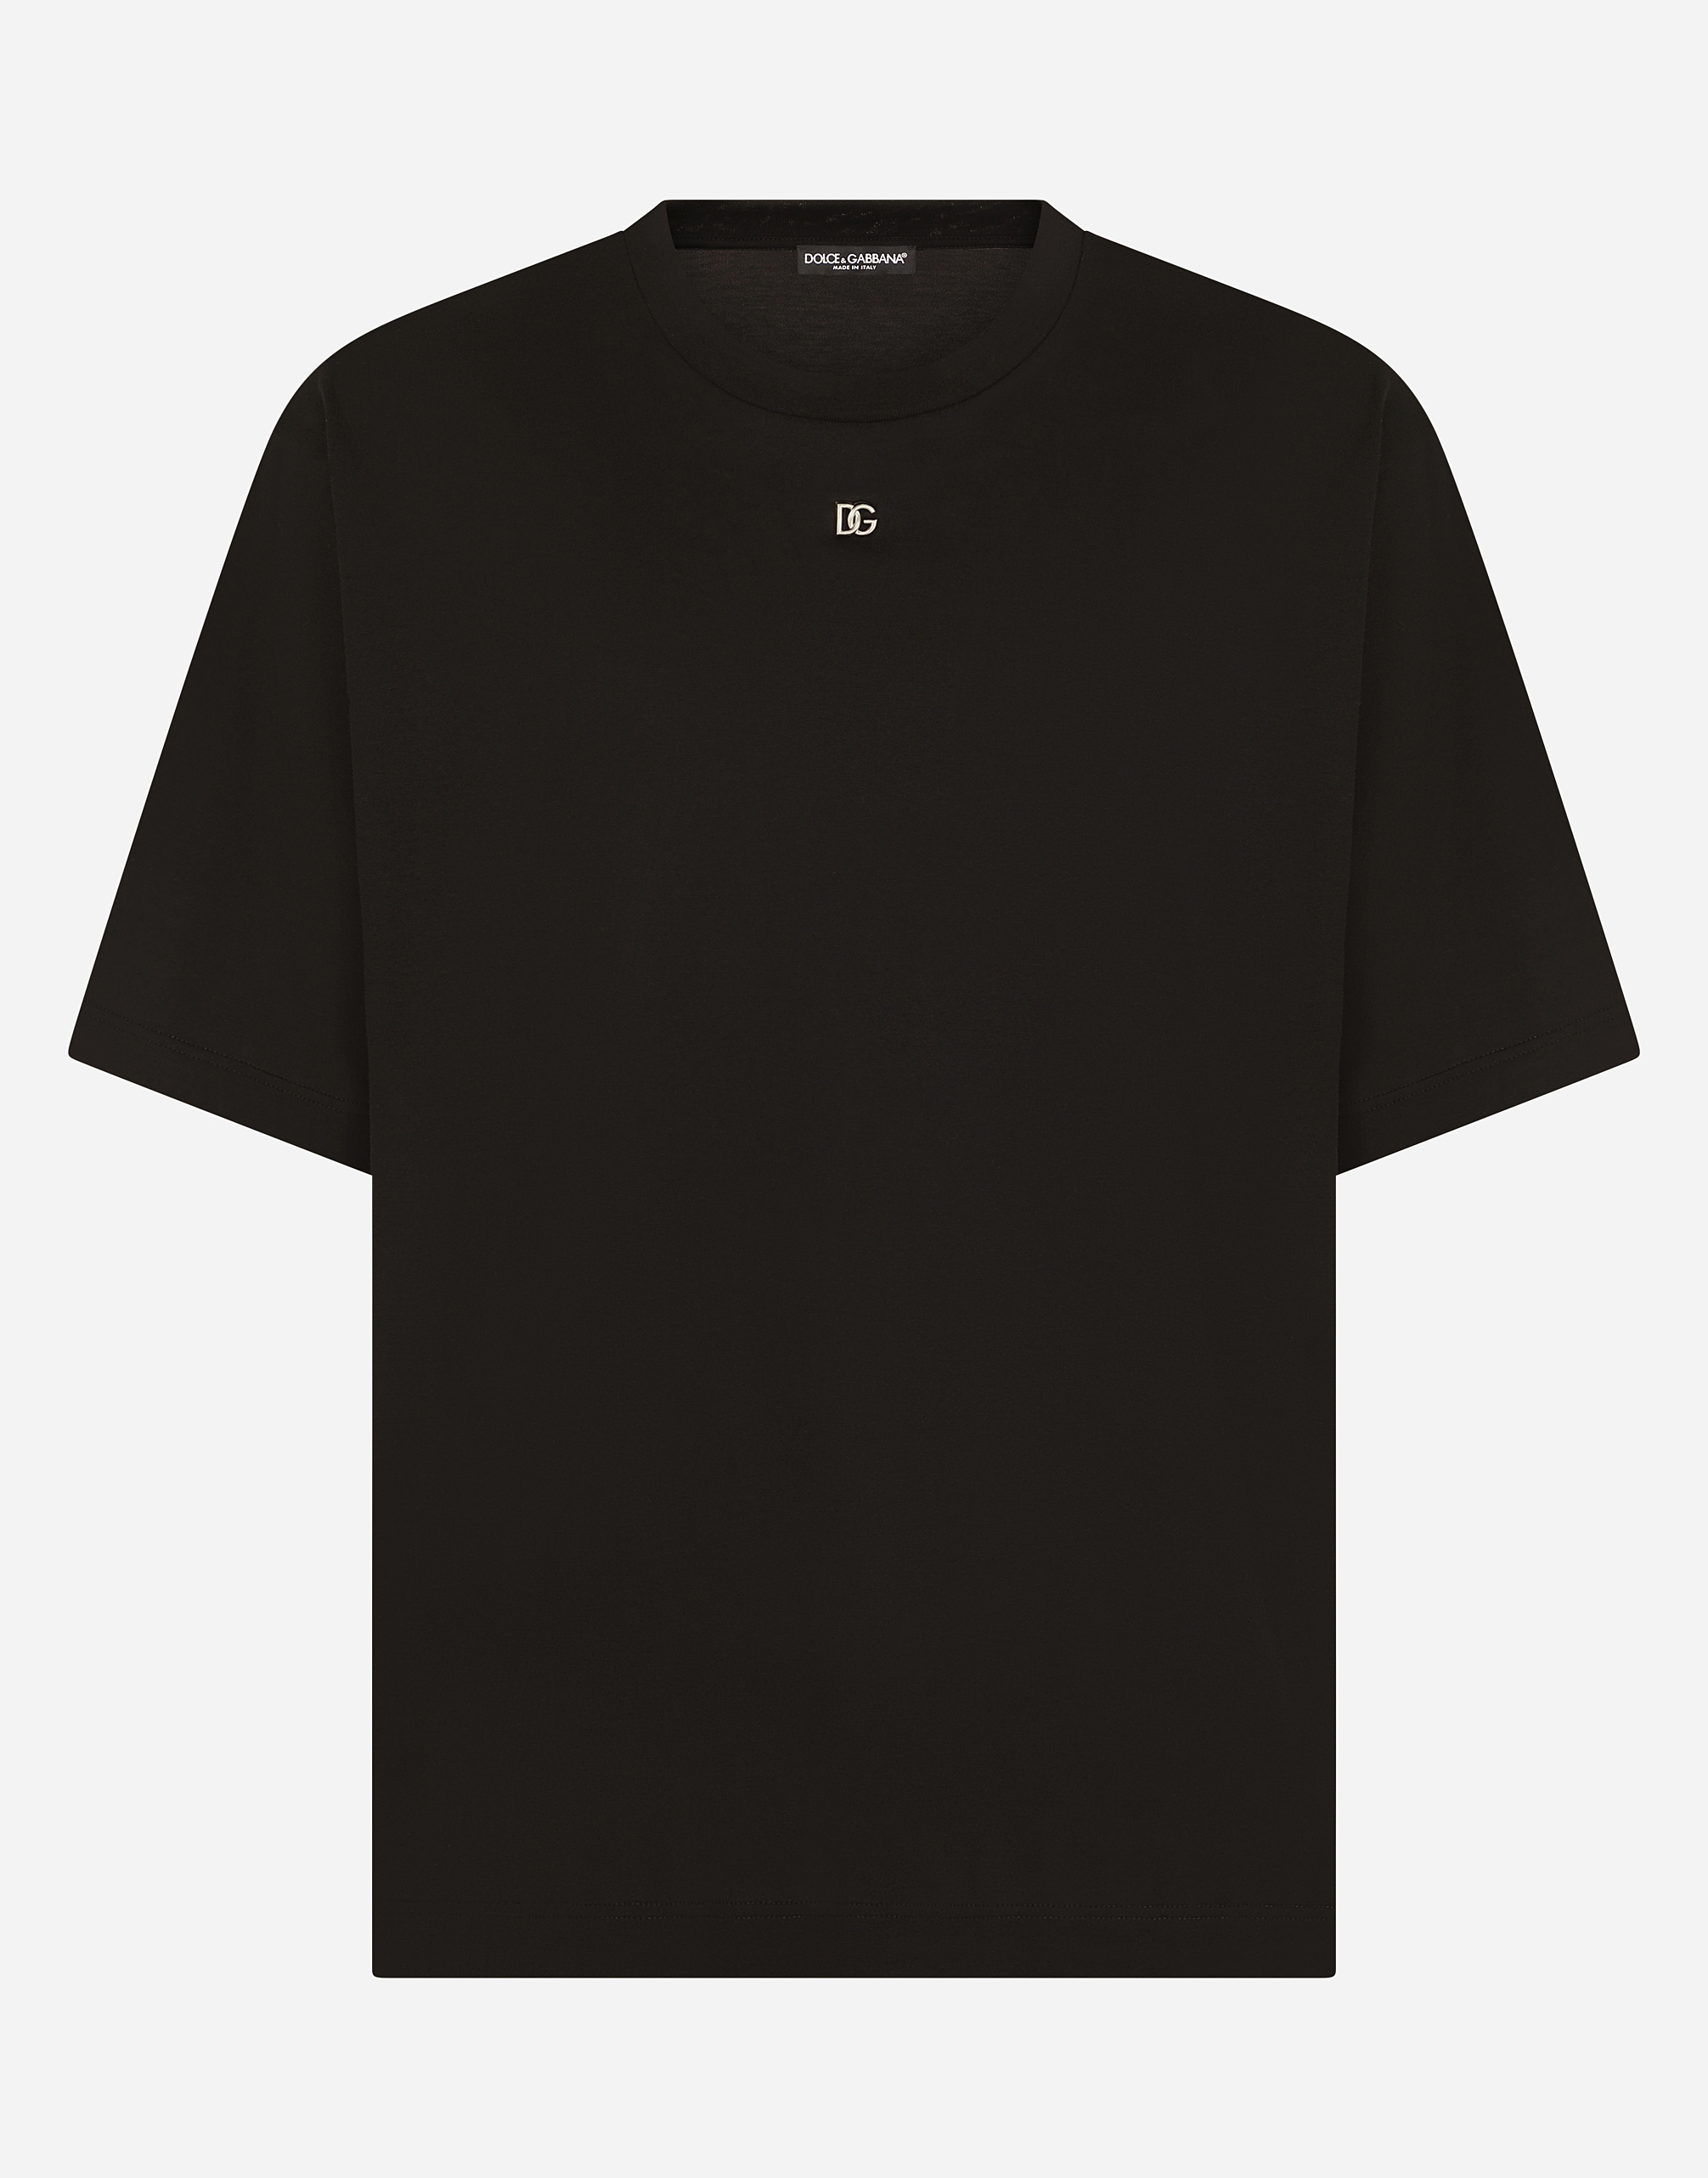 Cotton T-shirt with metal DG logo in Black